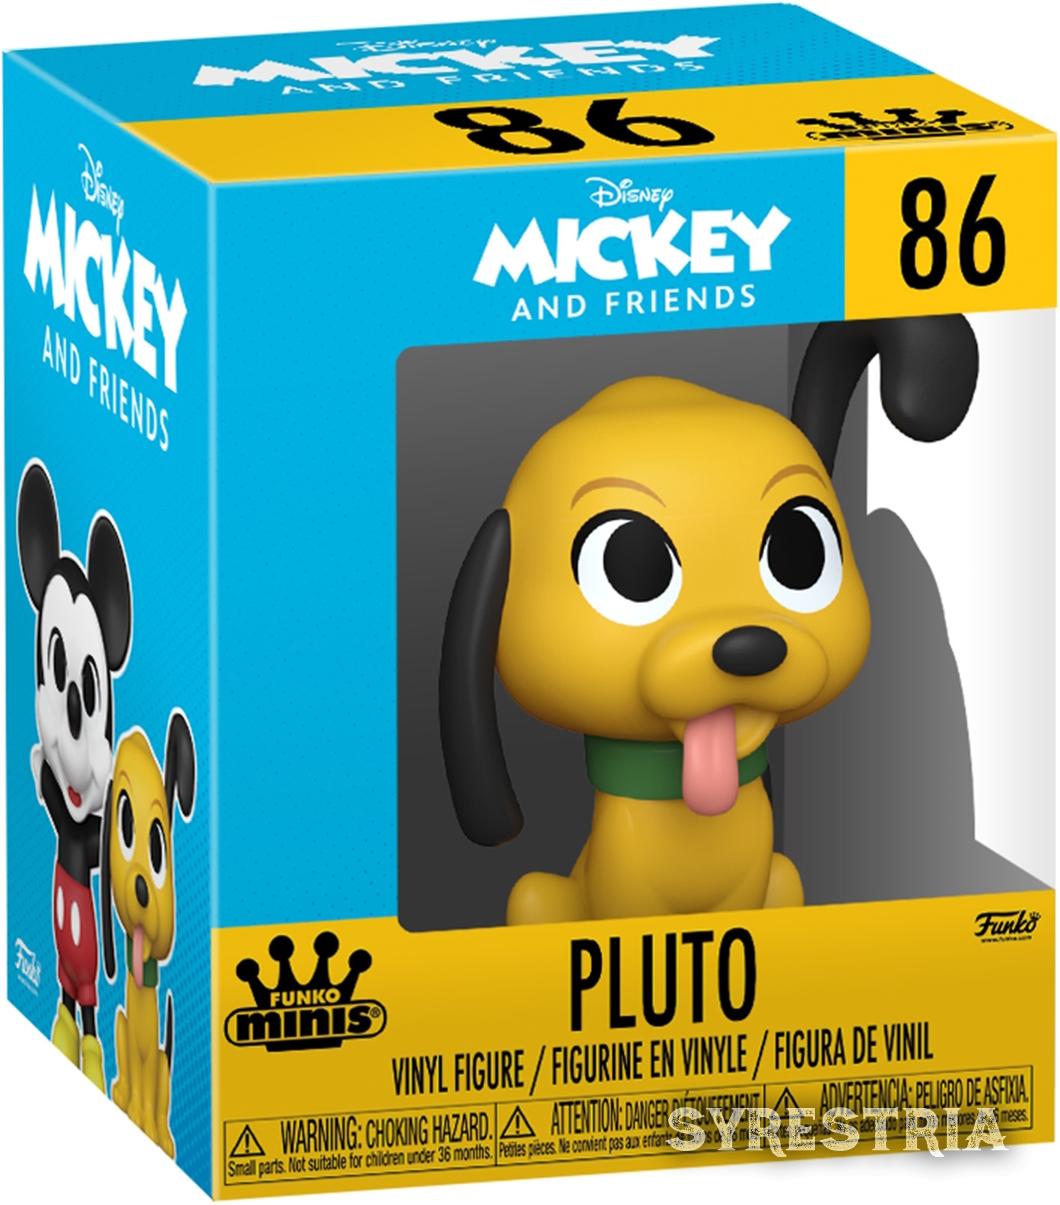 Disney Mickey and Frinds - Pluto 86 - Funko Minis Vynl Figuren